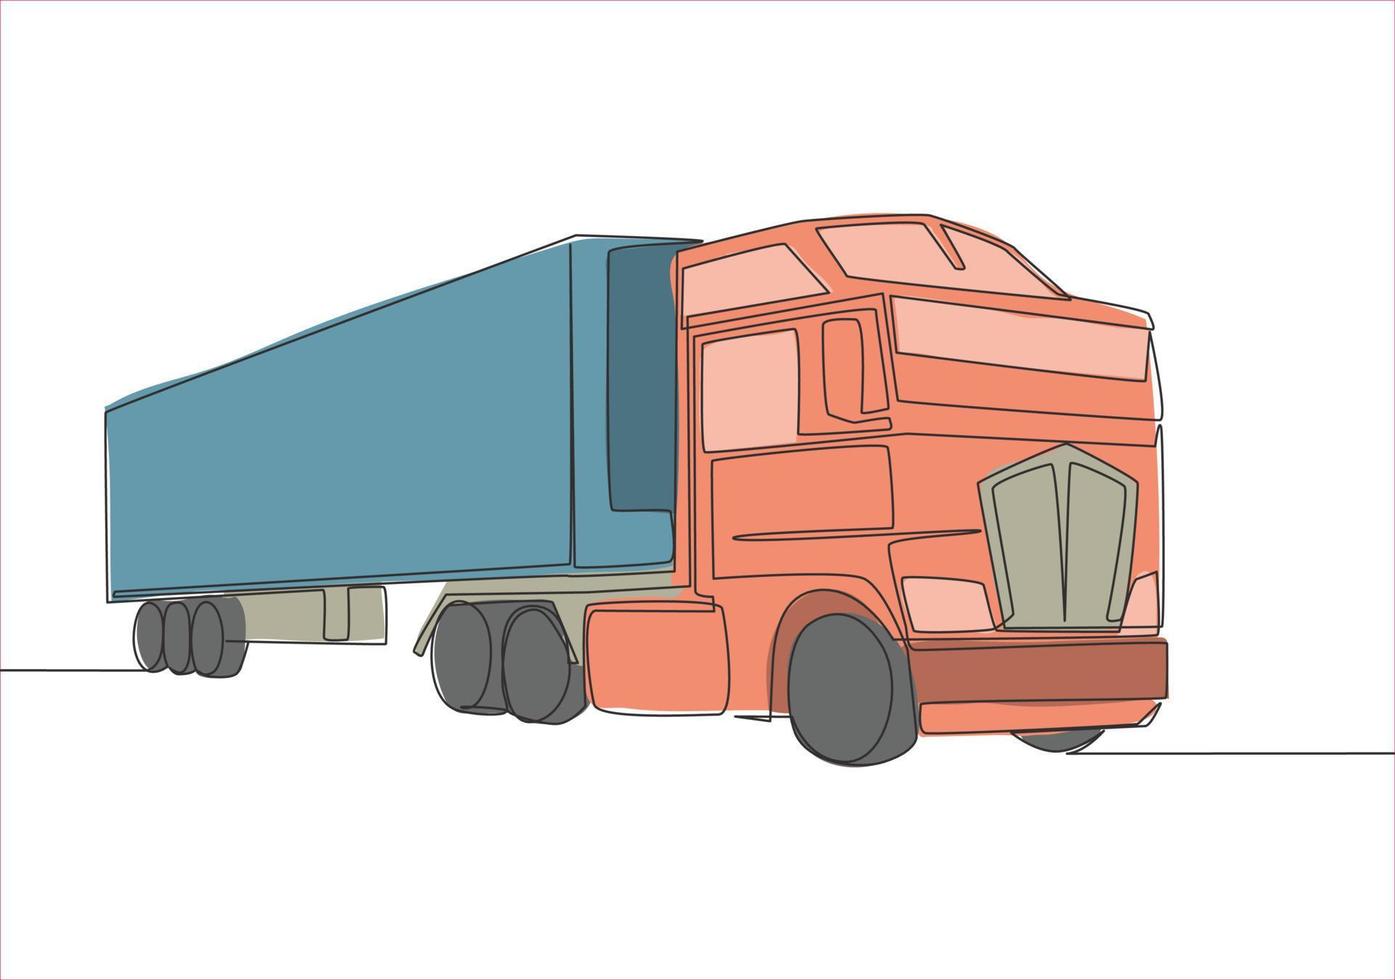 ett linje teckning av modern stor trailer lastbil med behållare. kurir frakt leverera fordon transport begrepp. enda kontinuerlig linje dra design vektor